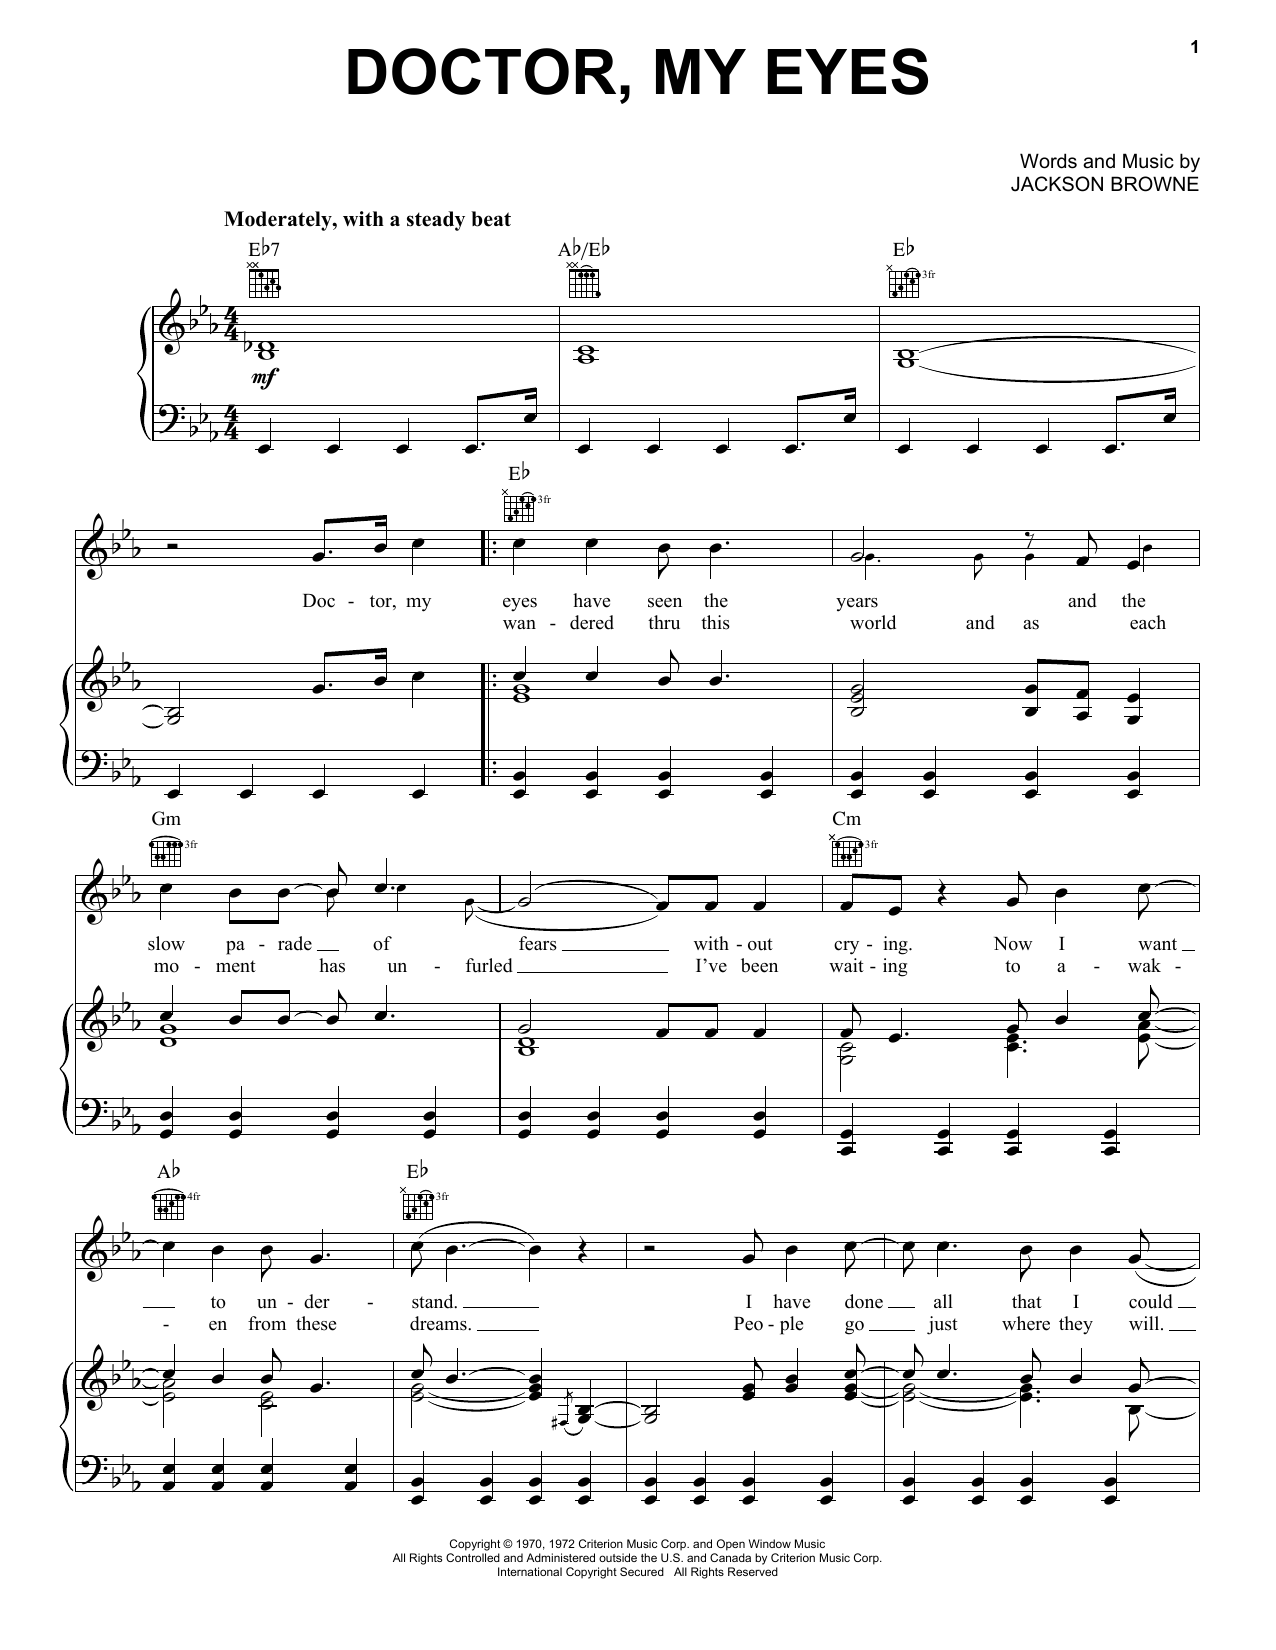 Jackson Browne Doctor, My Eyes Sheet Music Notes & Chords for Mandolin - Download or Print PDF